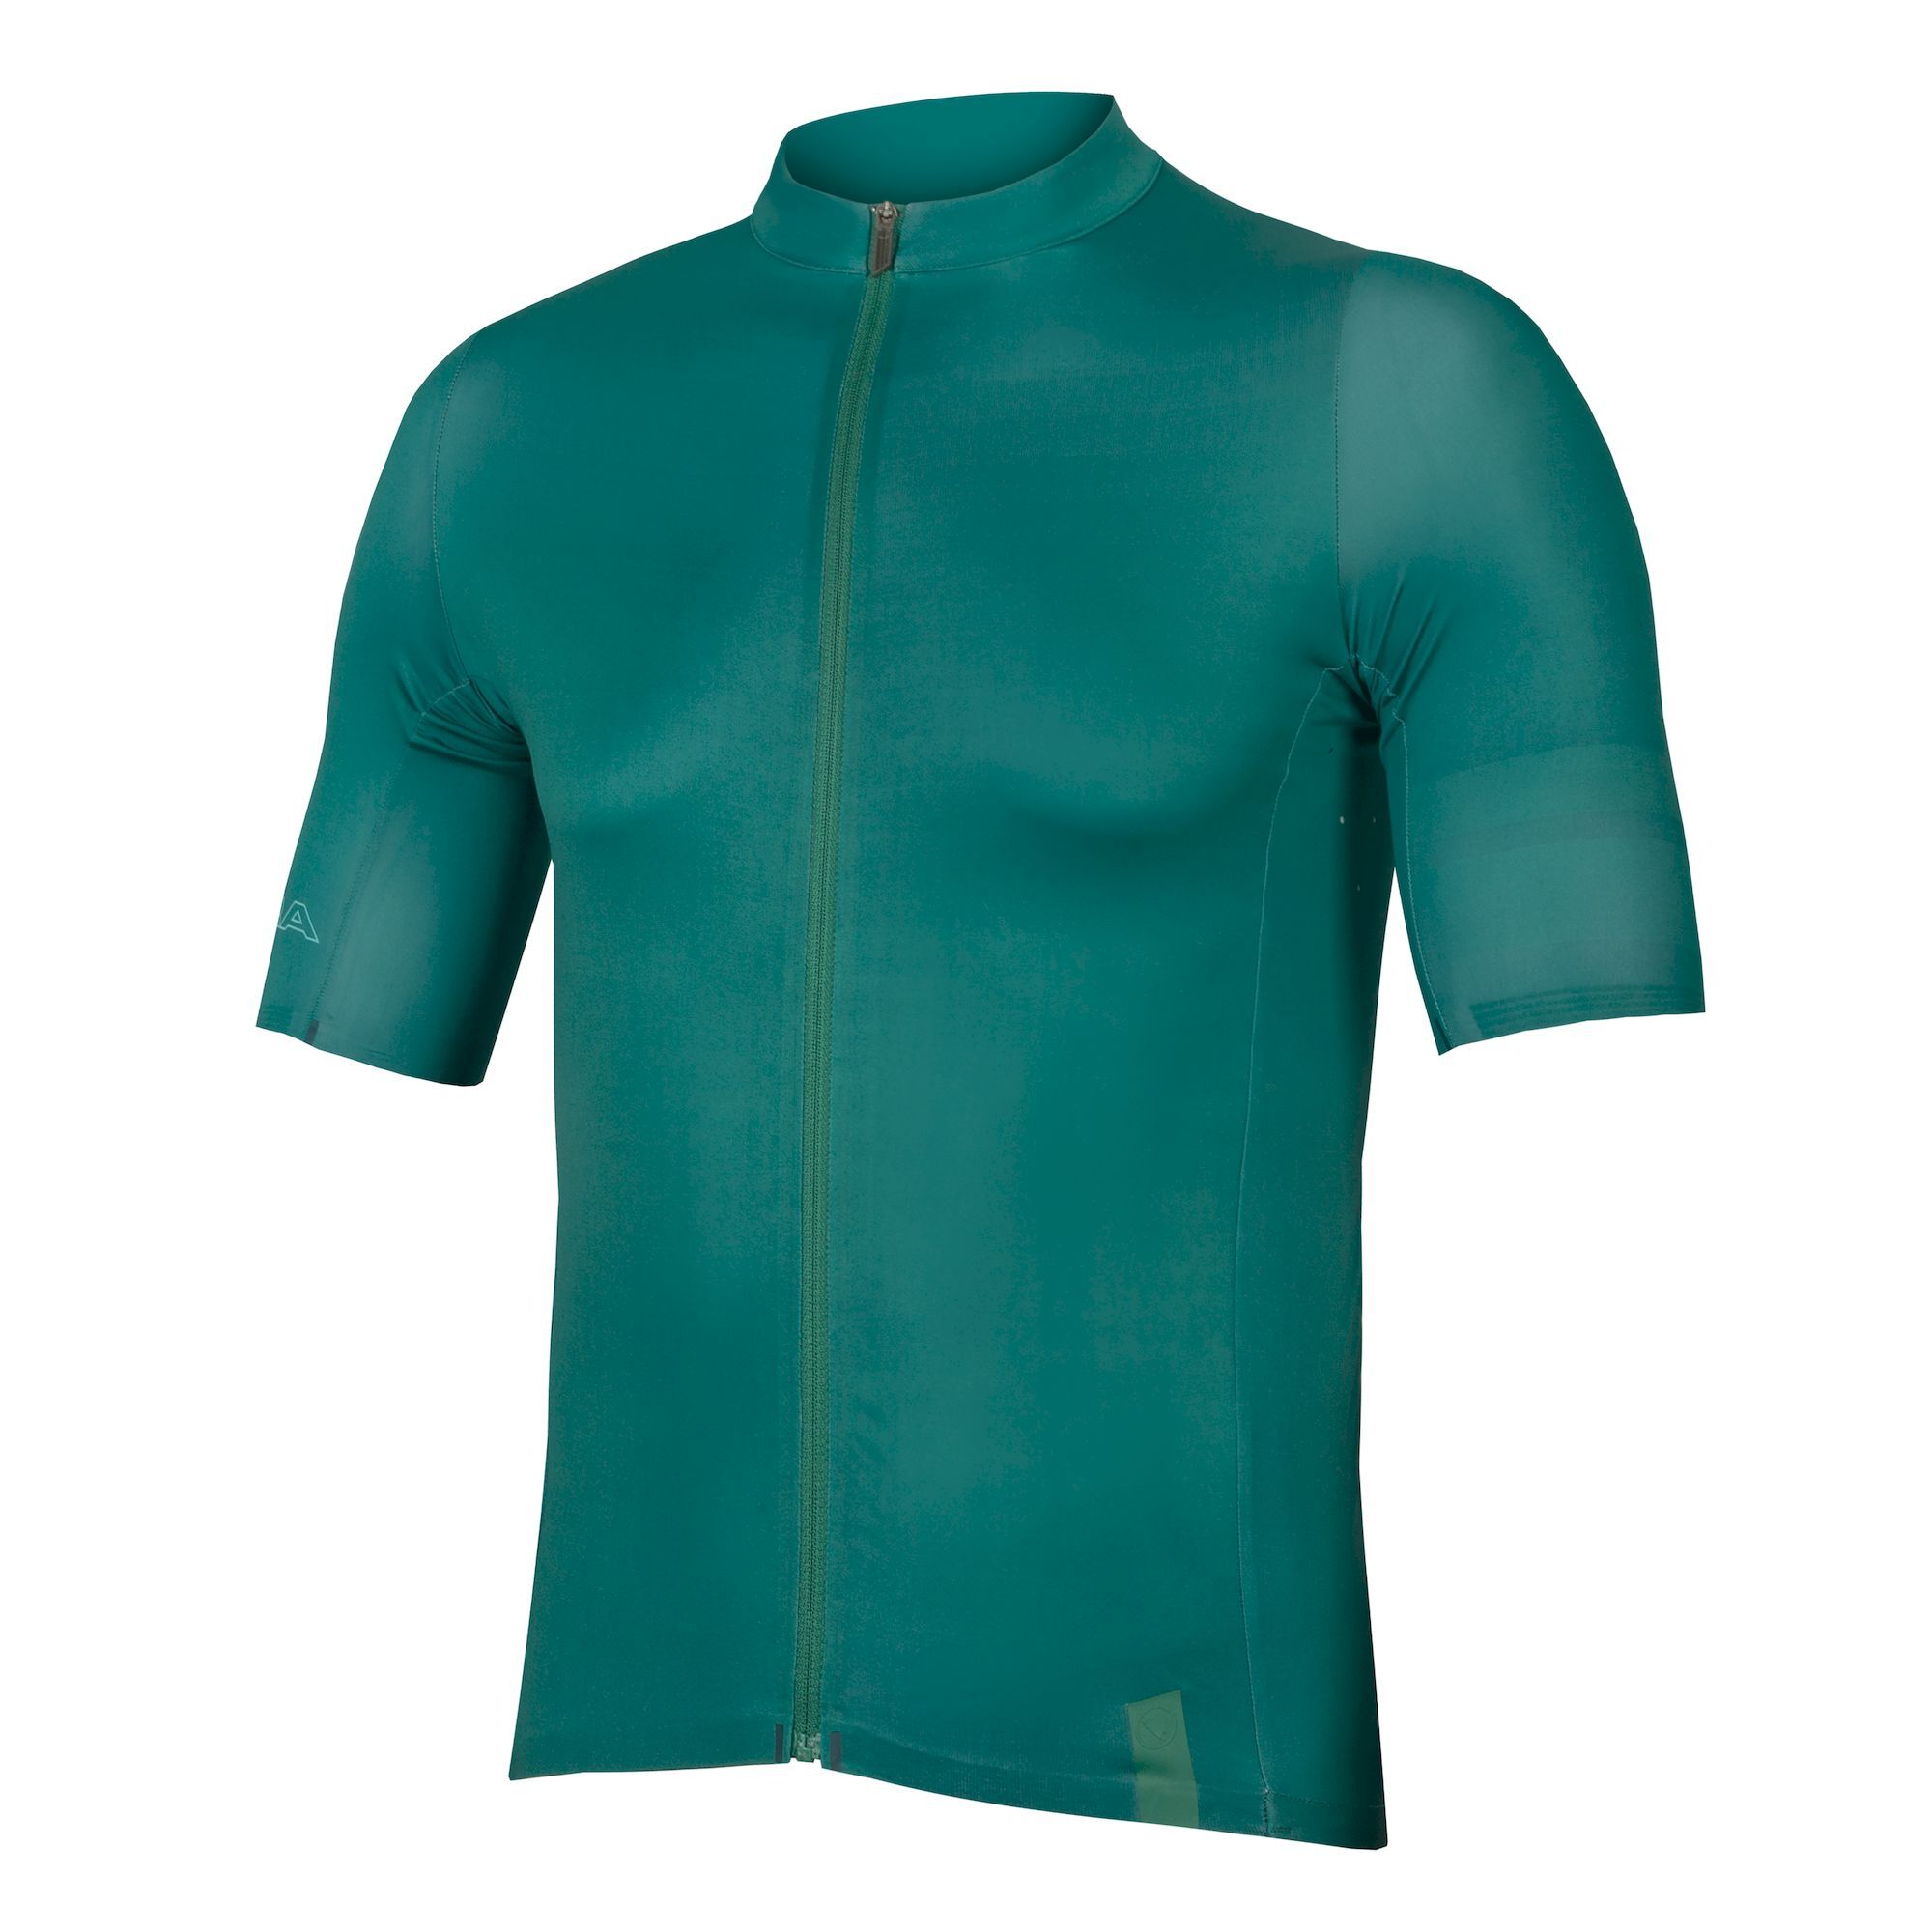 Endura Pro SL S/S Jersey - Cycling jersey - Men's